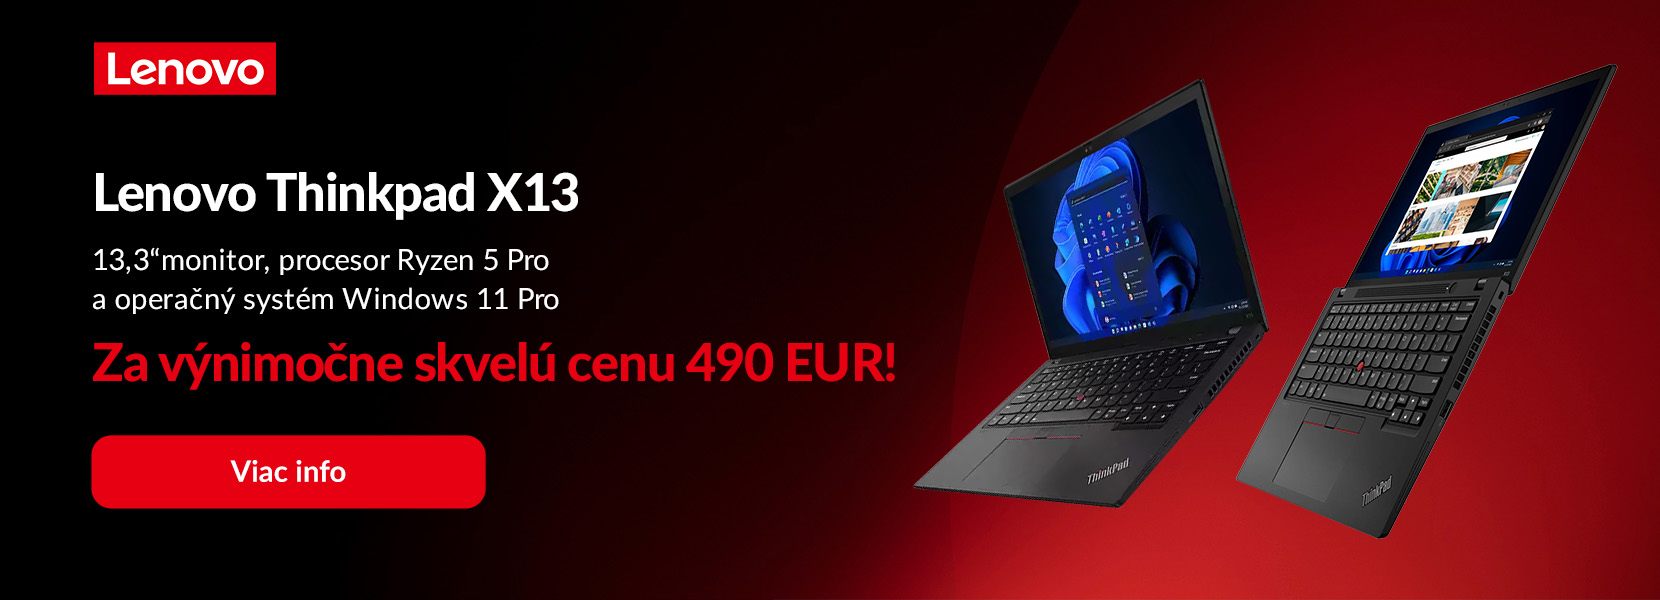 Lenovo Thinkpad X13 za 490€